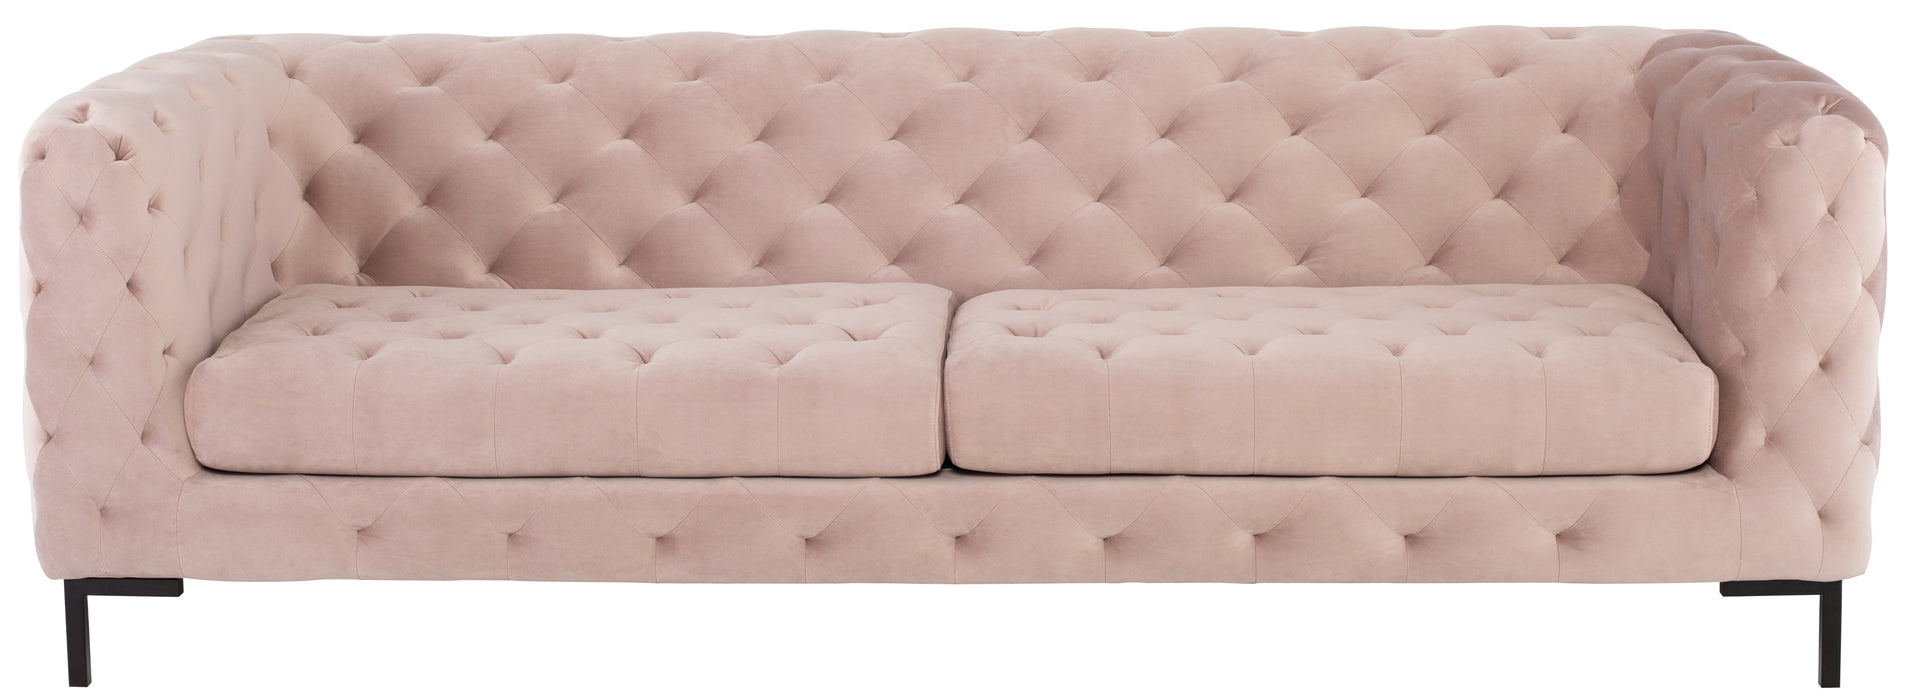 Tufty NL Blush Triple Seat Sofa